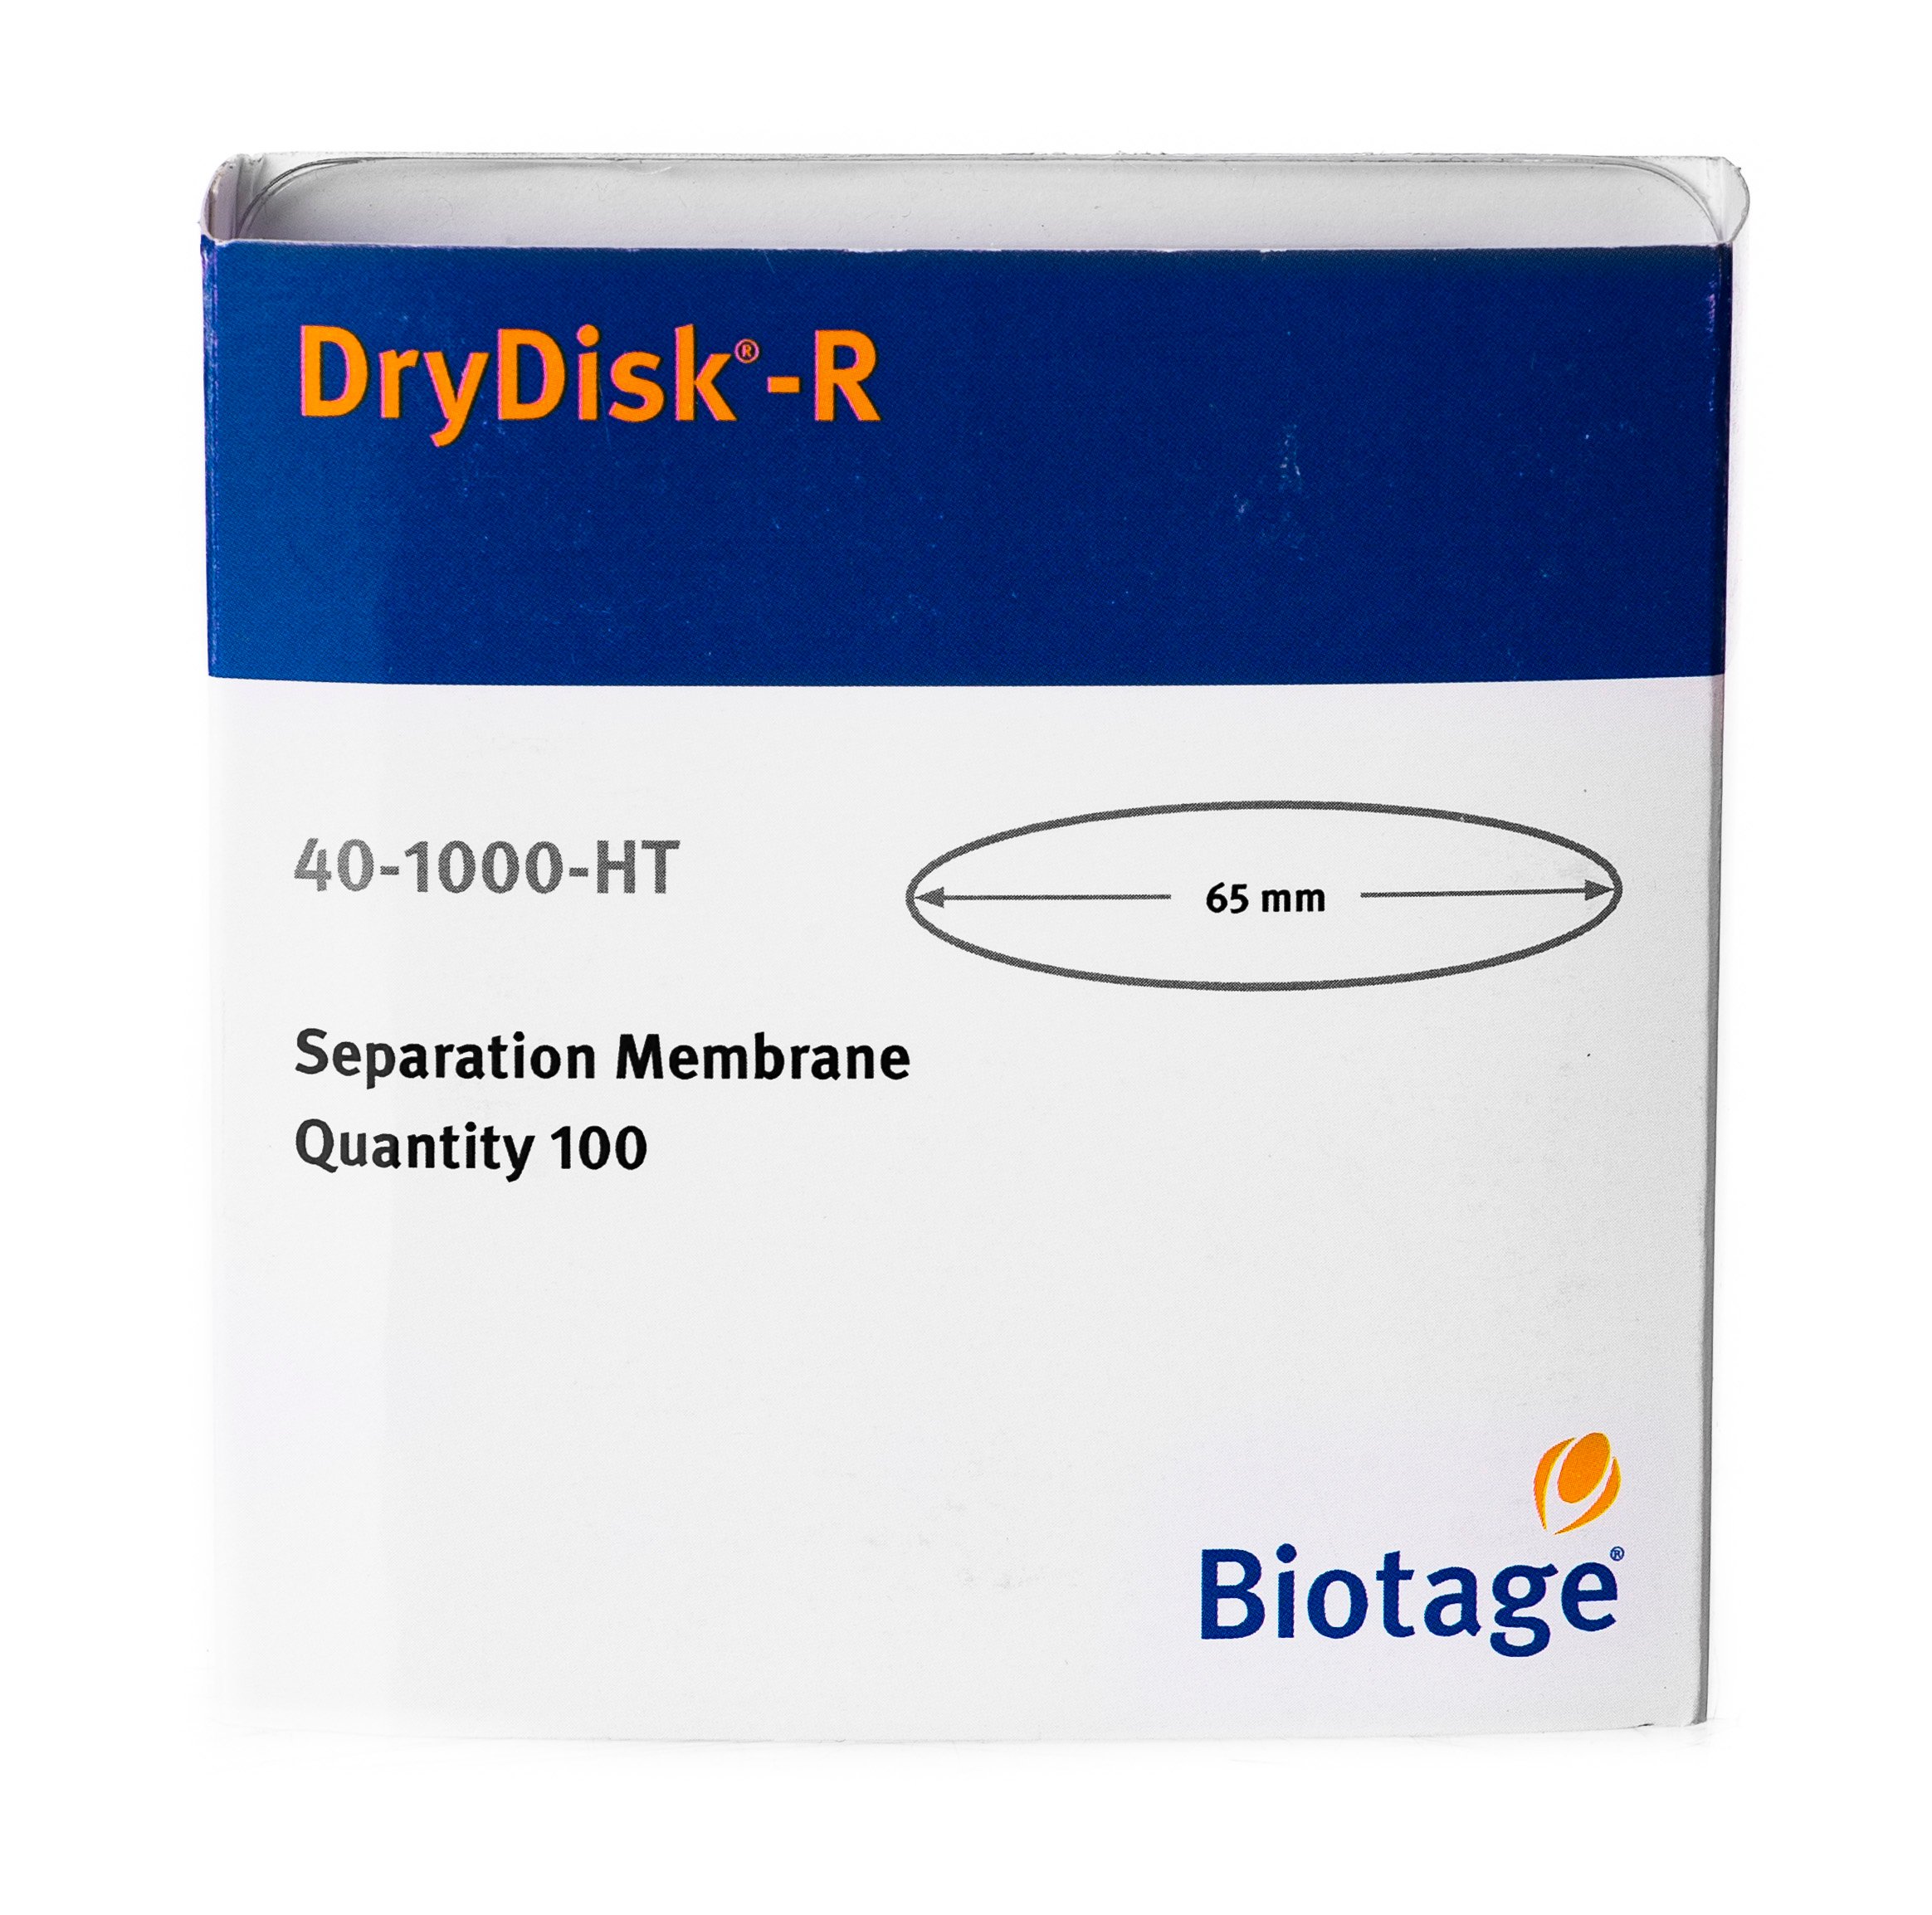 40-1000-HT DryDisk-R